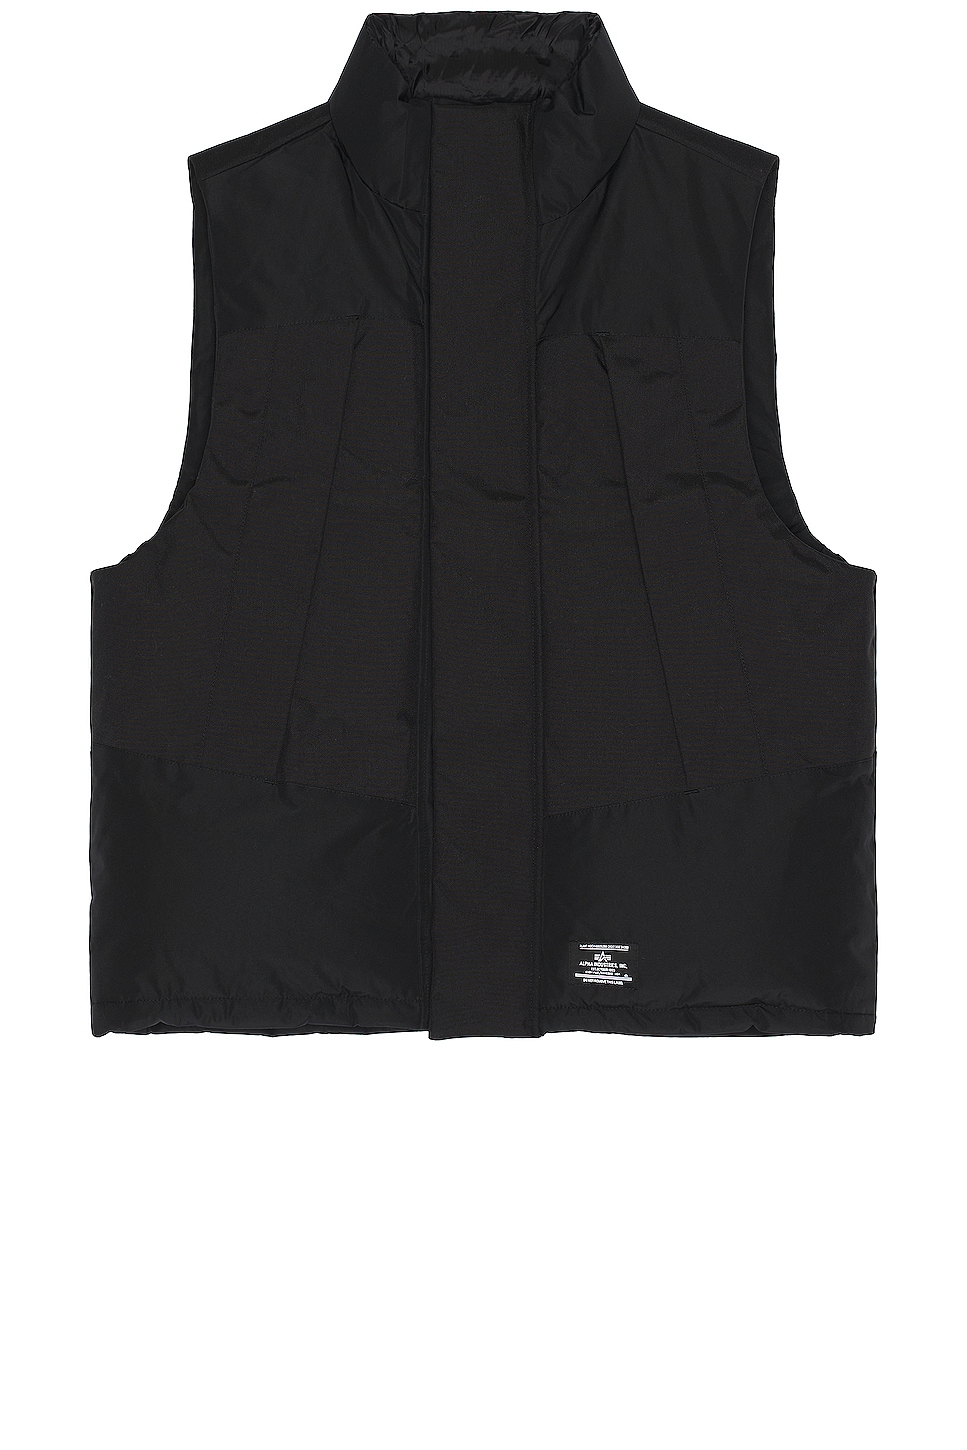 PCU Mod Vest in Black